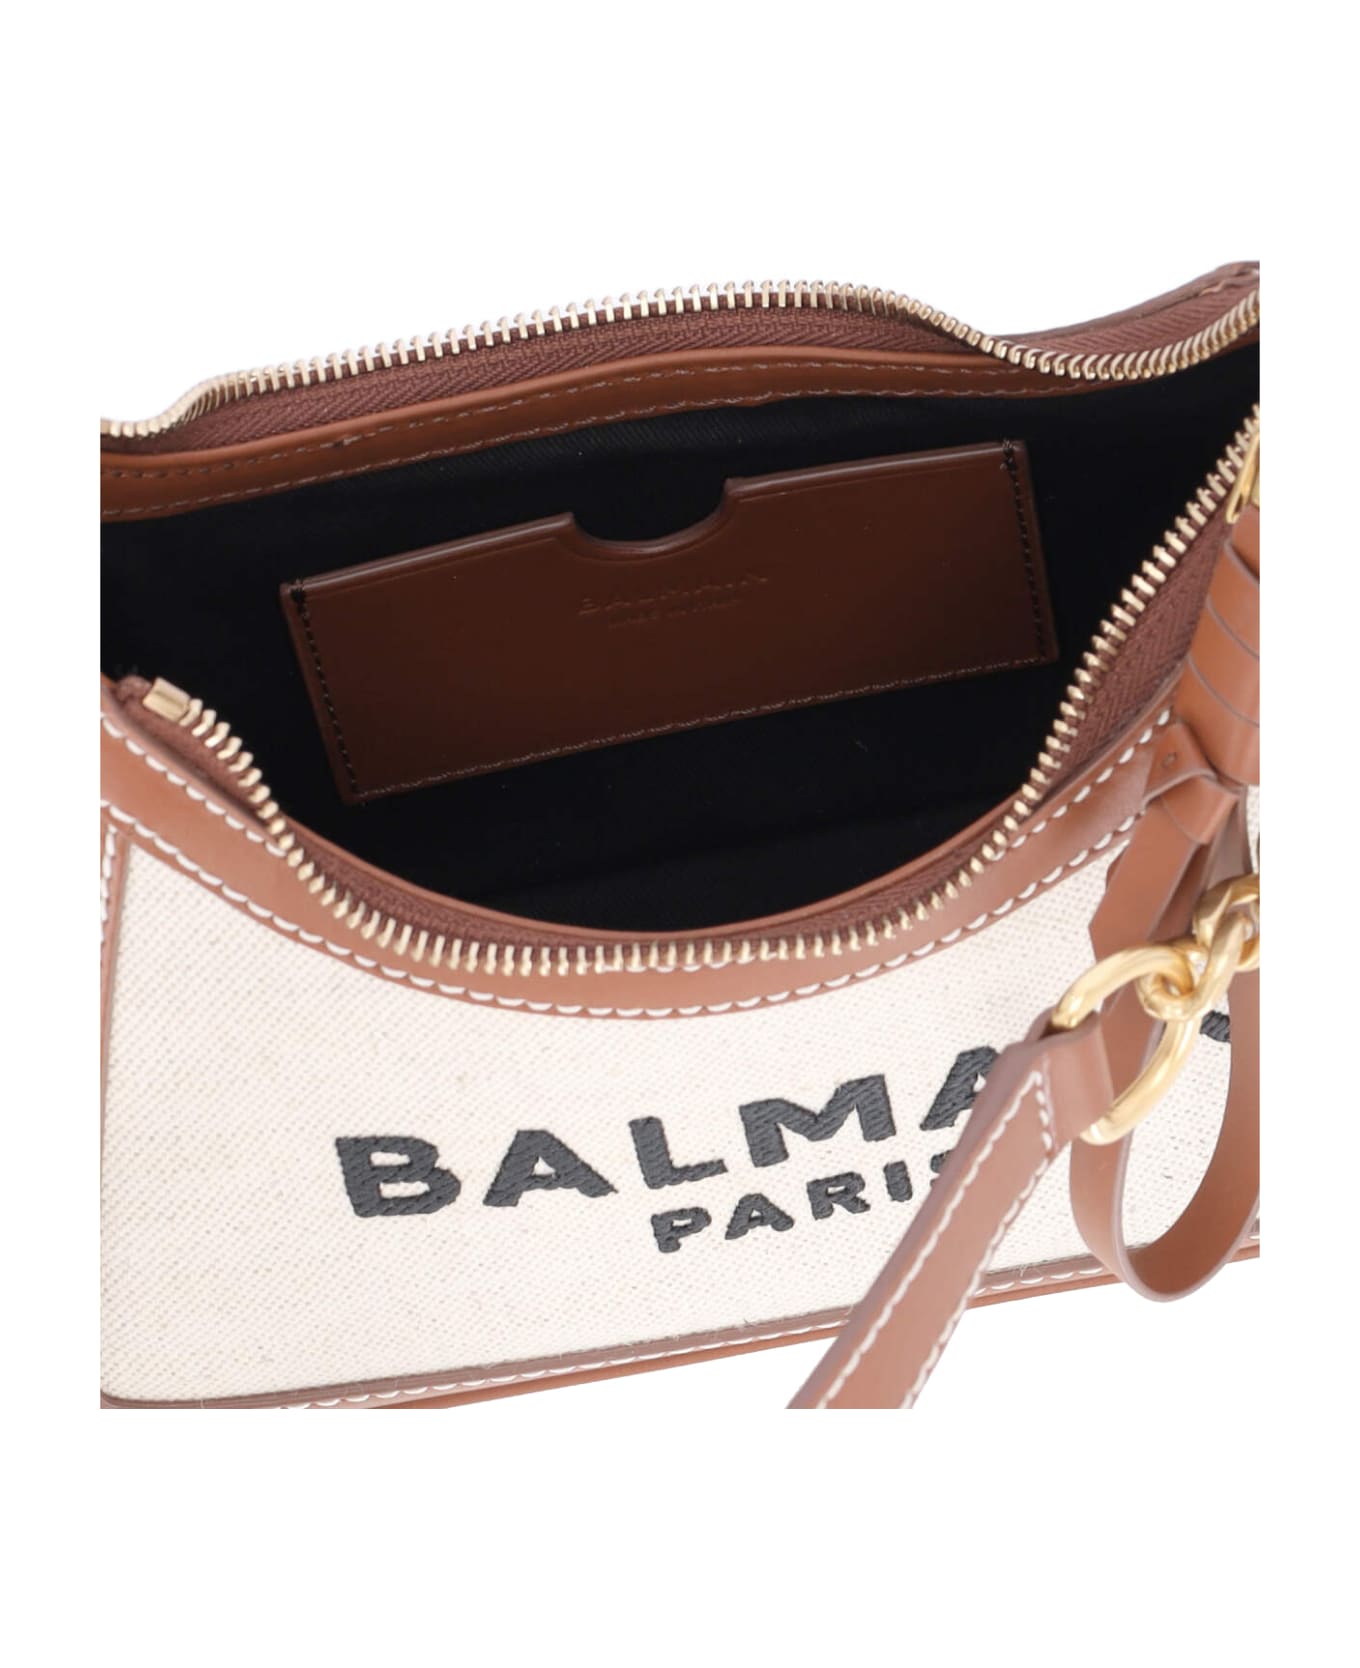 Balmain 'b-army' Shoulder Bag - Natuler/marron トートバッグ